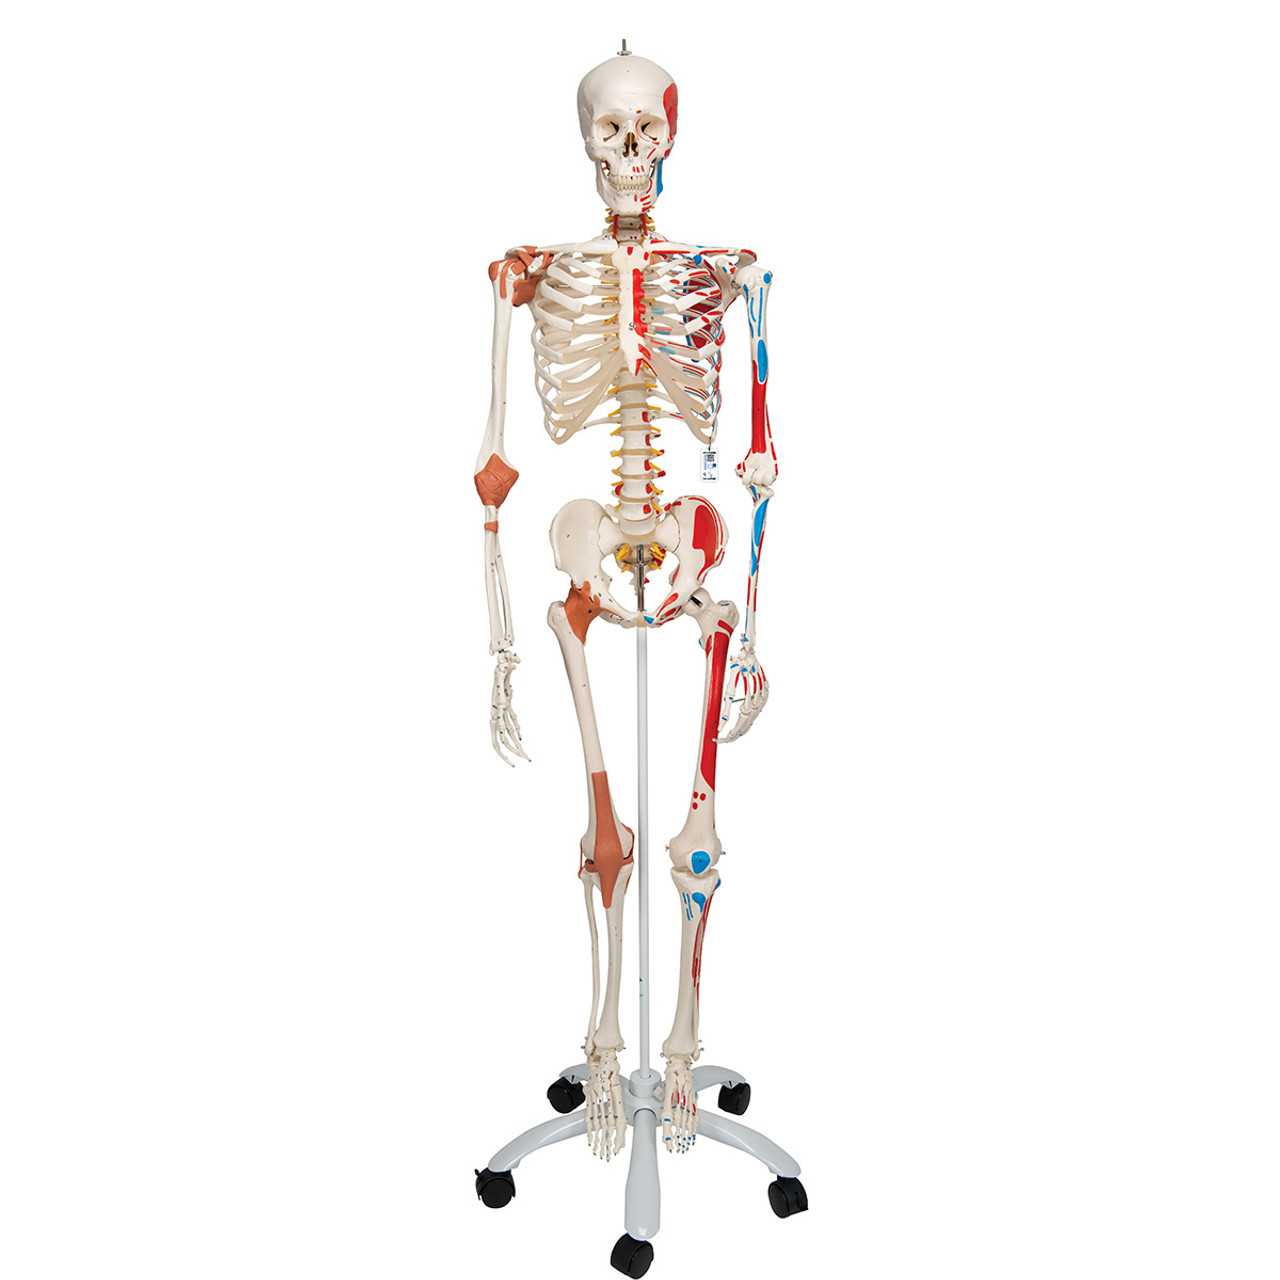 Le squelette humain - 1001630 - VR2113L - Skeletal System - 3B Scientific